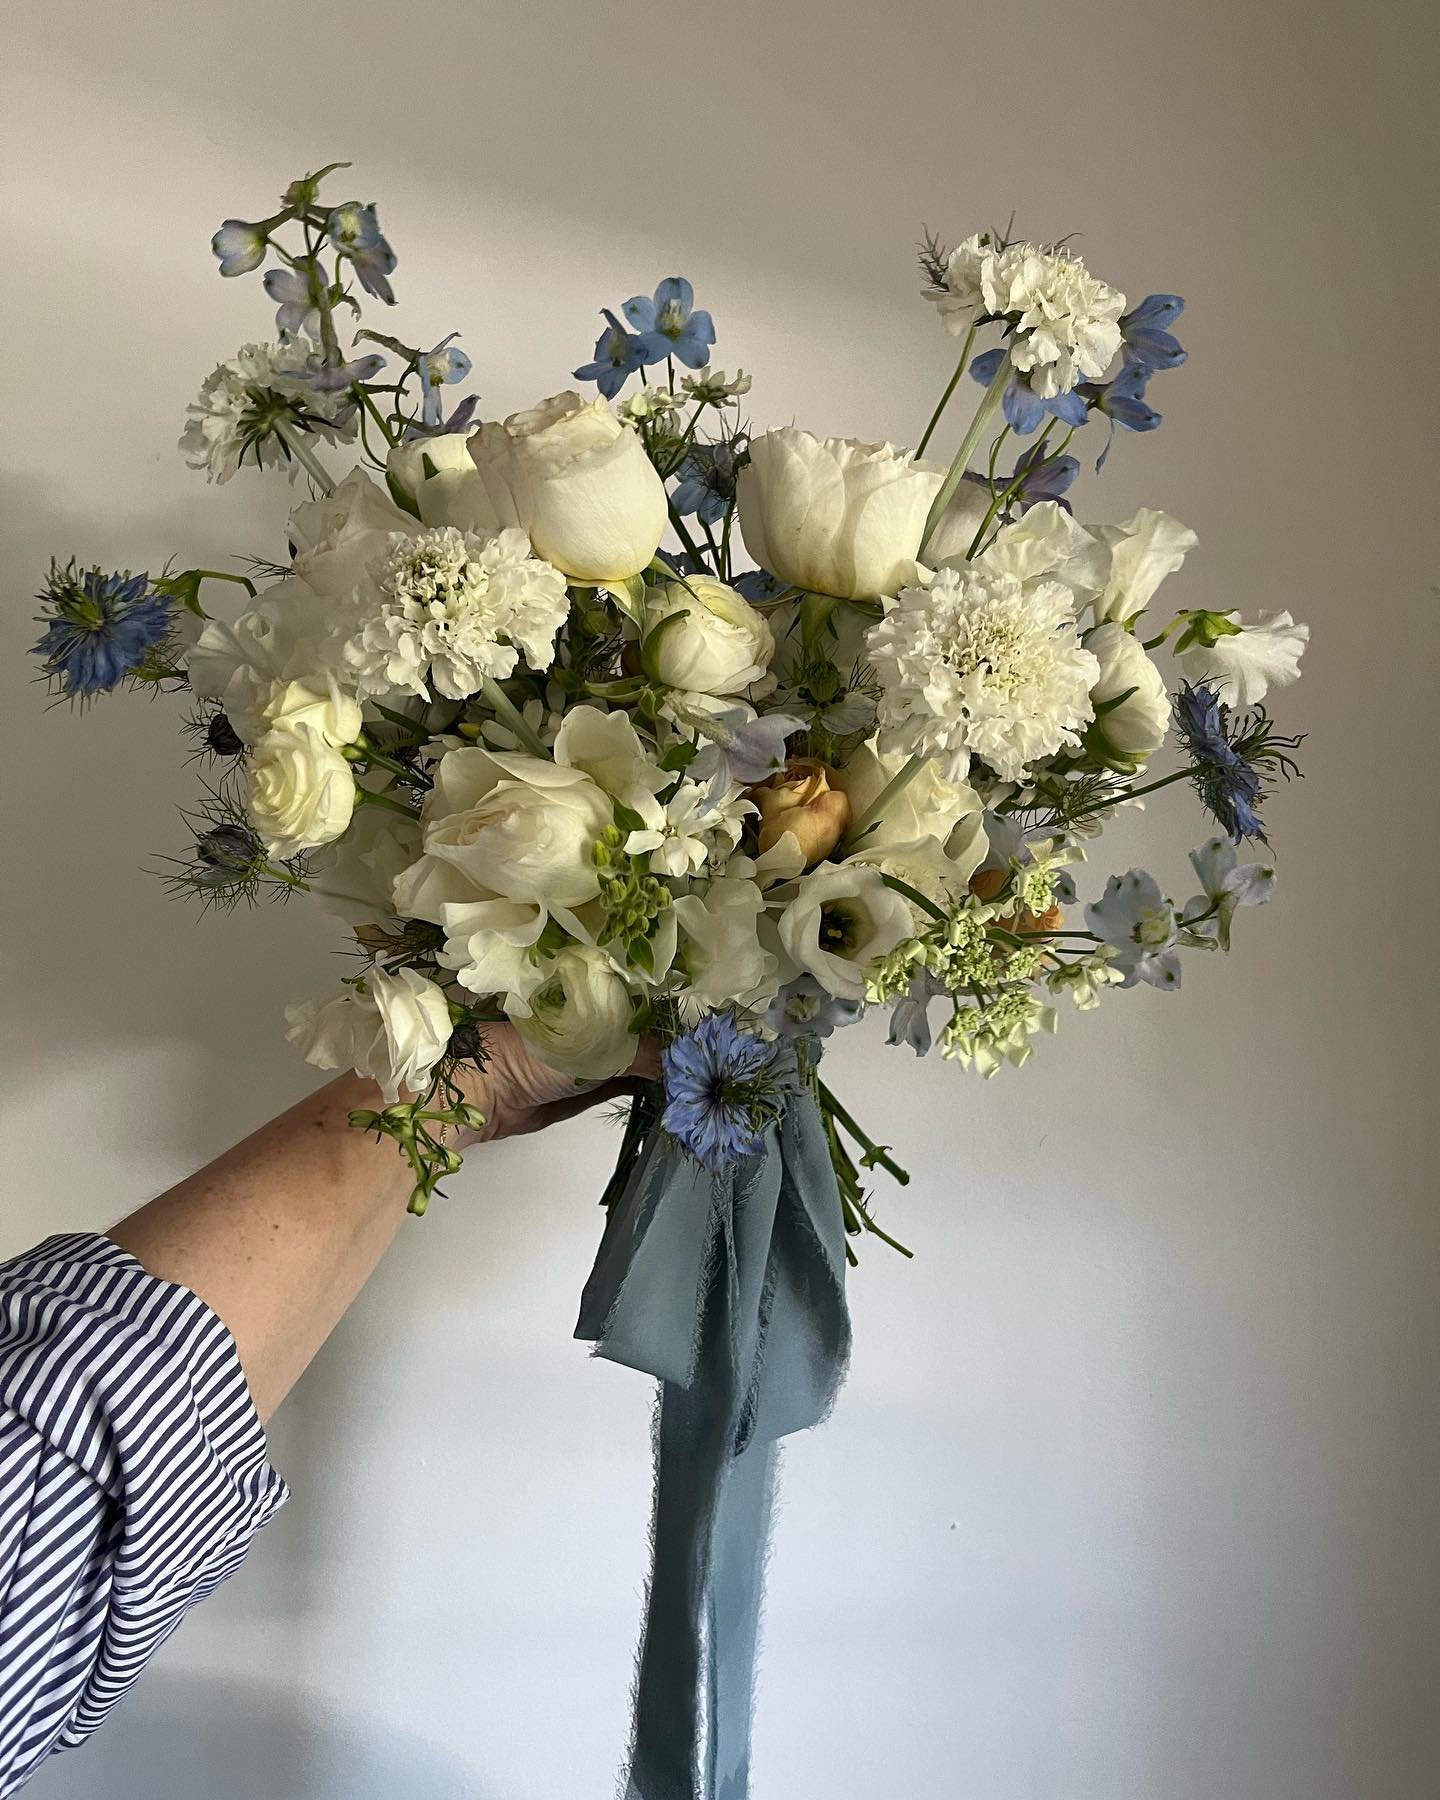 as someone who eloped herself, I love an elopement bride 💙

#florist #flowersofinstagram #bouquetsofinstagram #bridalbouquet #elopement #bouquet #bridesofinstagram #eventflorist #visualdesign #bouquetinspo #flowerinspiration #design #porchflowers #n